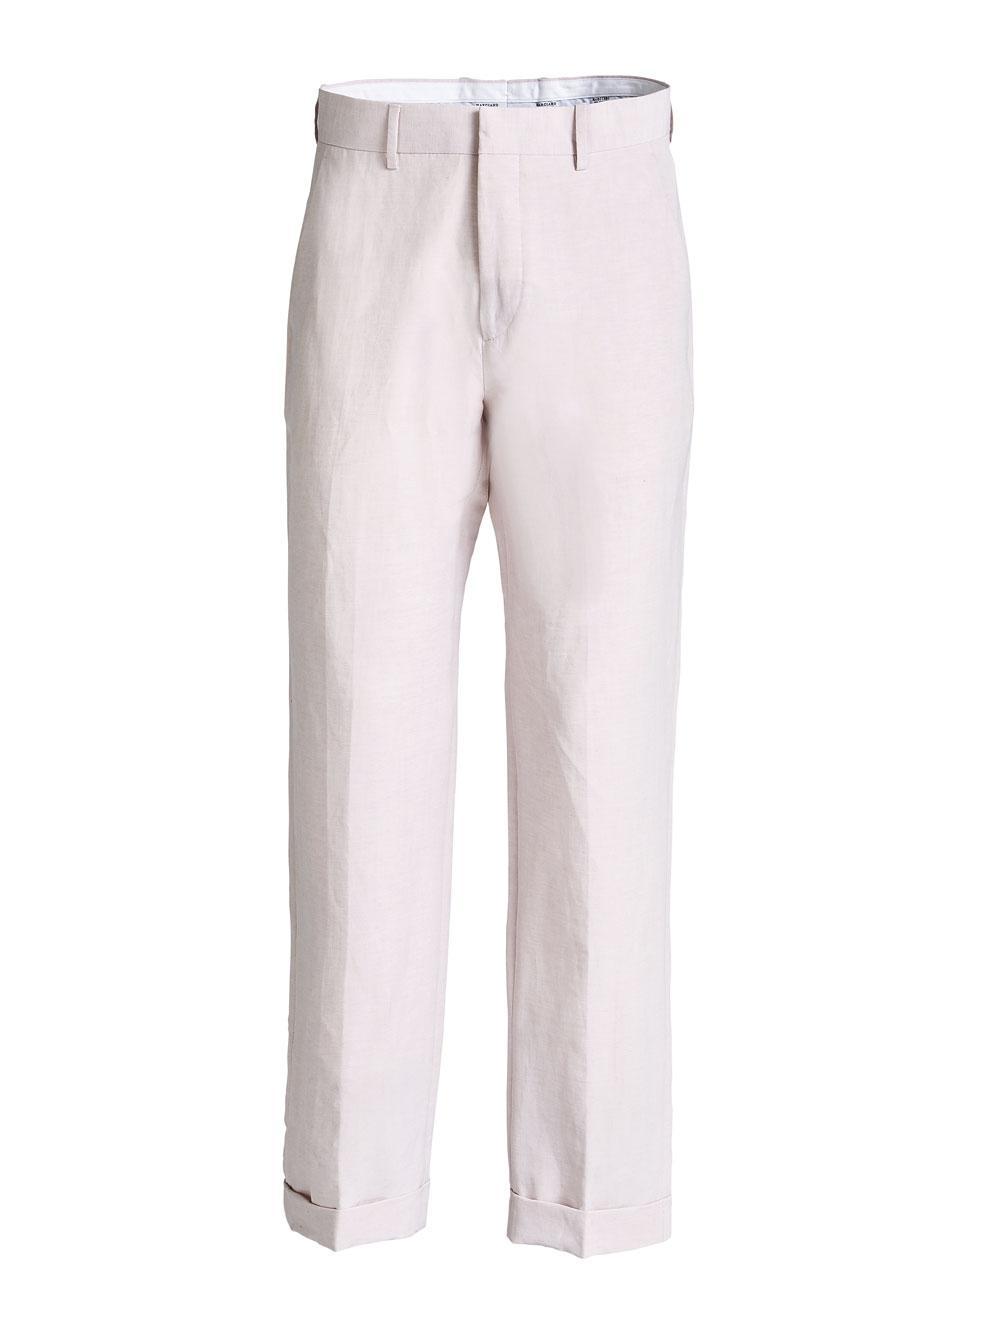 Pantalon en polyester, viscose et élasthanne, Marciano Los Angeles, 159 euros.